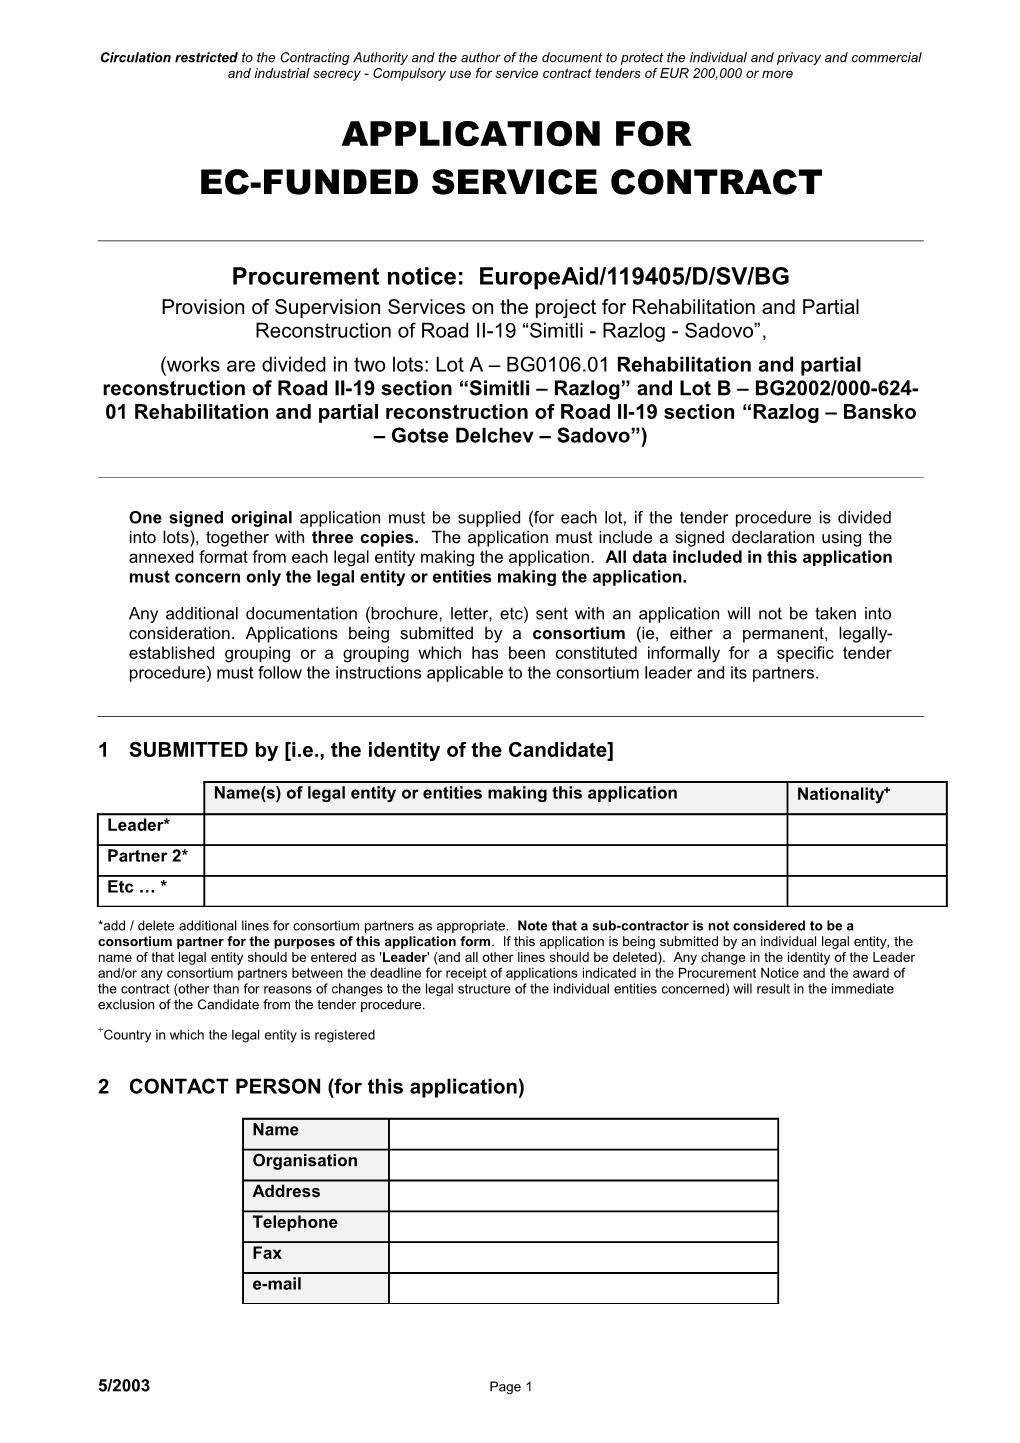 Procurement Notice: Europeaid/119405/D/SV/BG